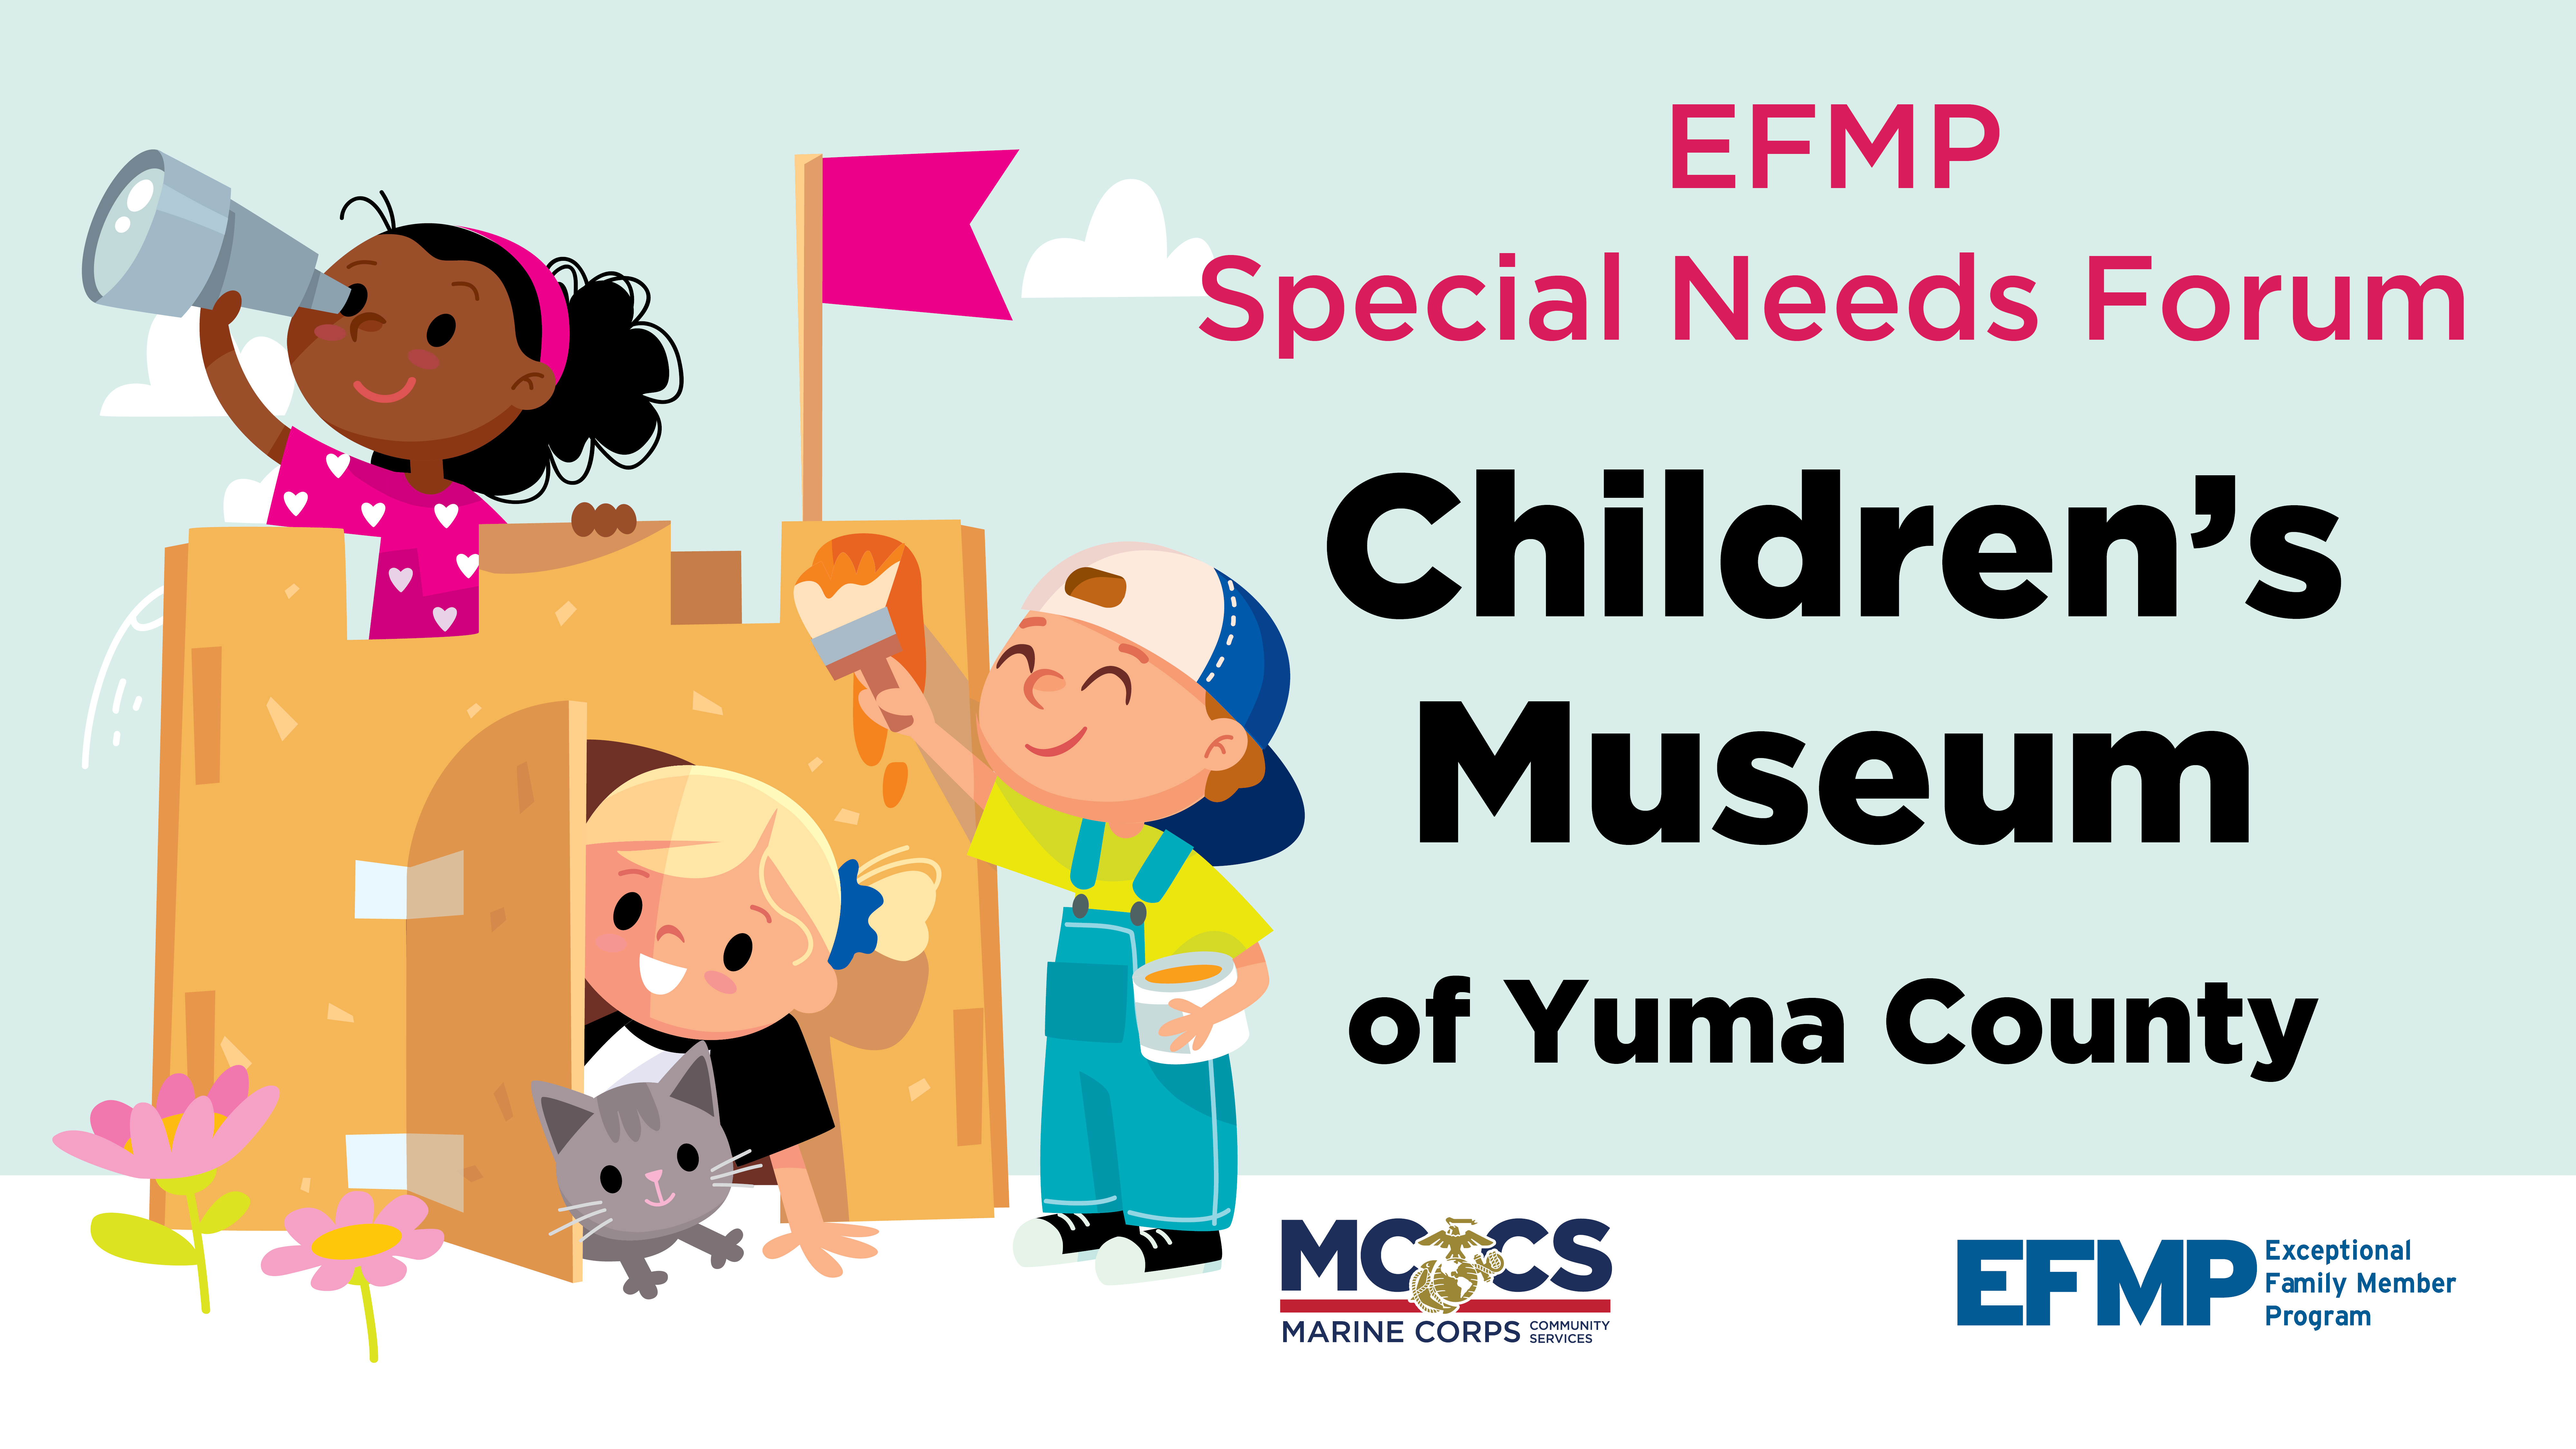 EFMP Special Needs Forum: Introduction to EFMP